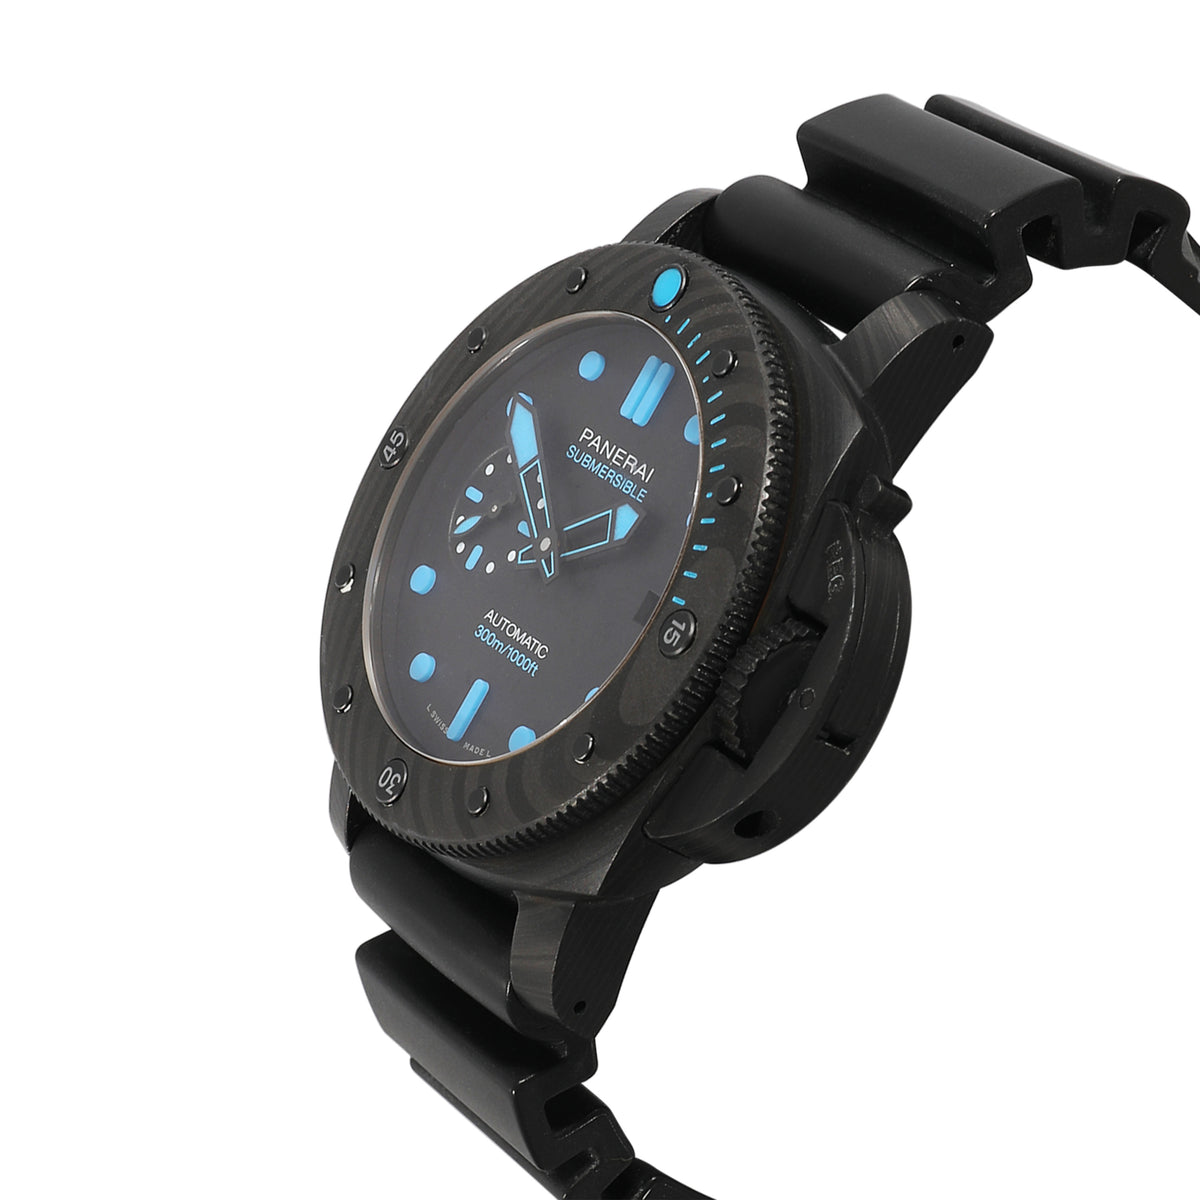 Luminor Submersible Carbontech PAM00960 Men's Watch in  Carbon Fiber